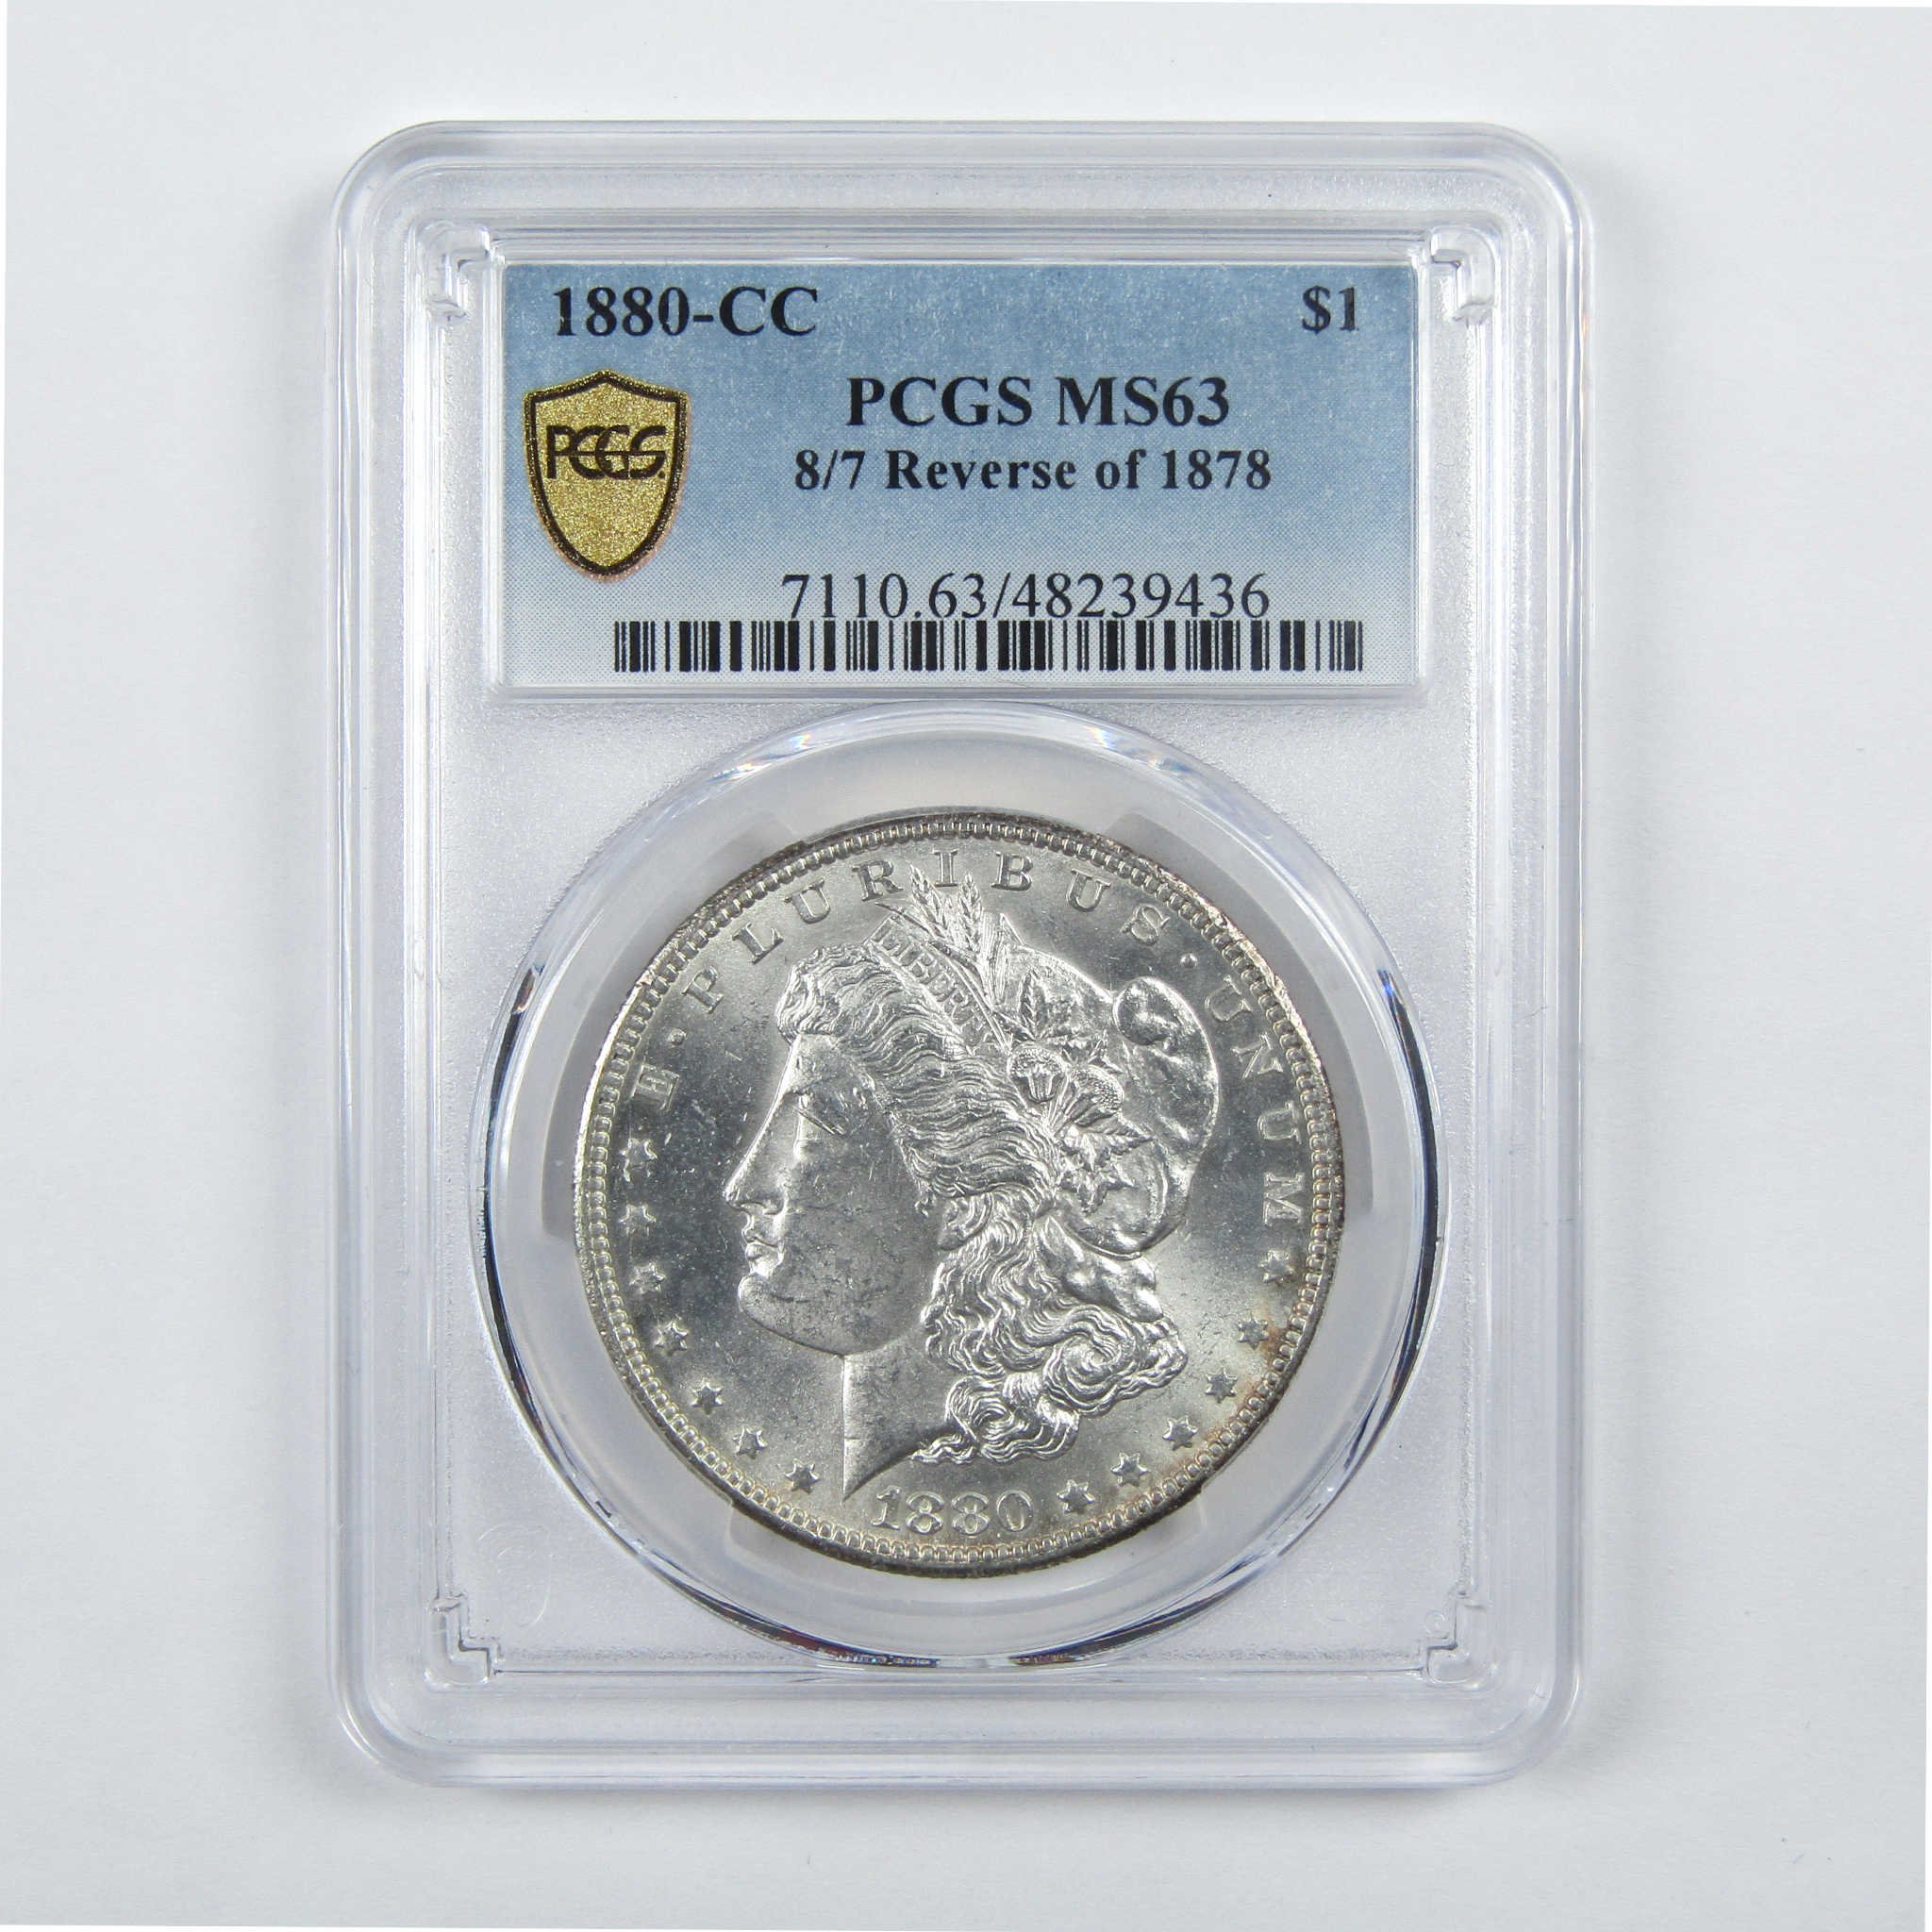 1880 CC 8/7 Rev 78 Morgan Dollar MS 63 PCGS Silver $1 Coin SKU:I11736 - Morgan coin - Morgan silver dollar - Morgan silver dollar for sale - Profile Coins &amp; Collectibles